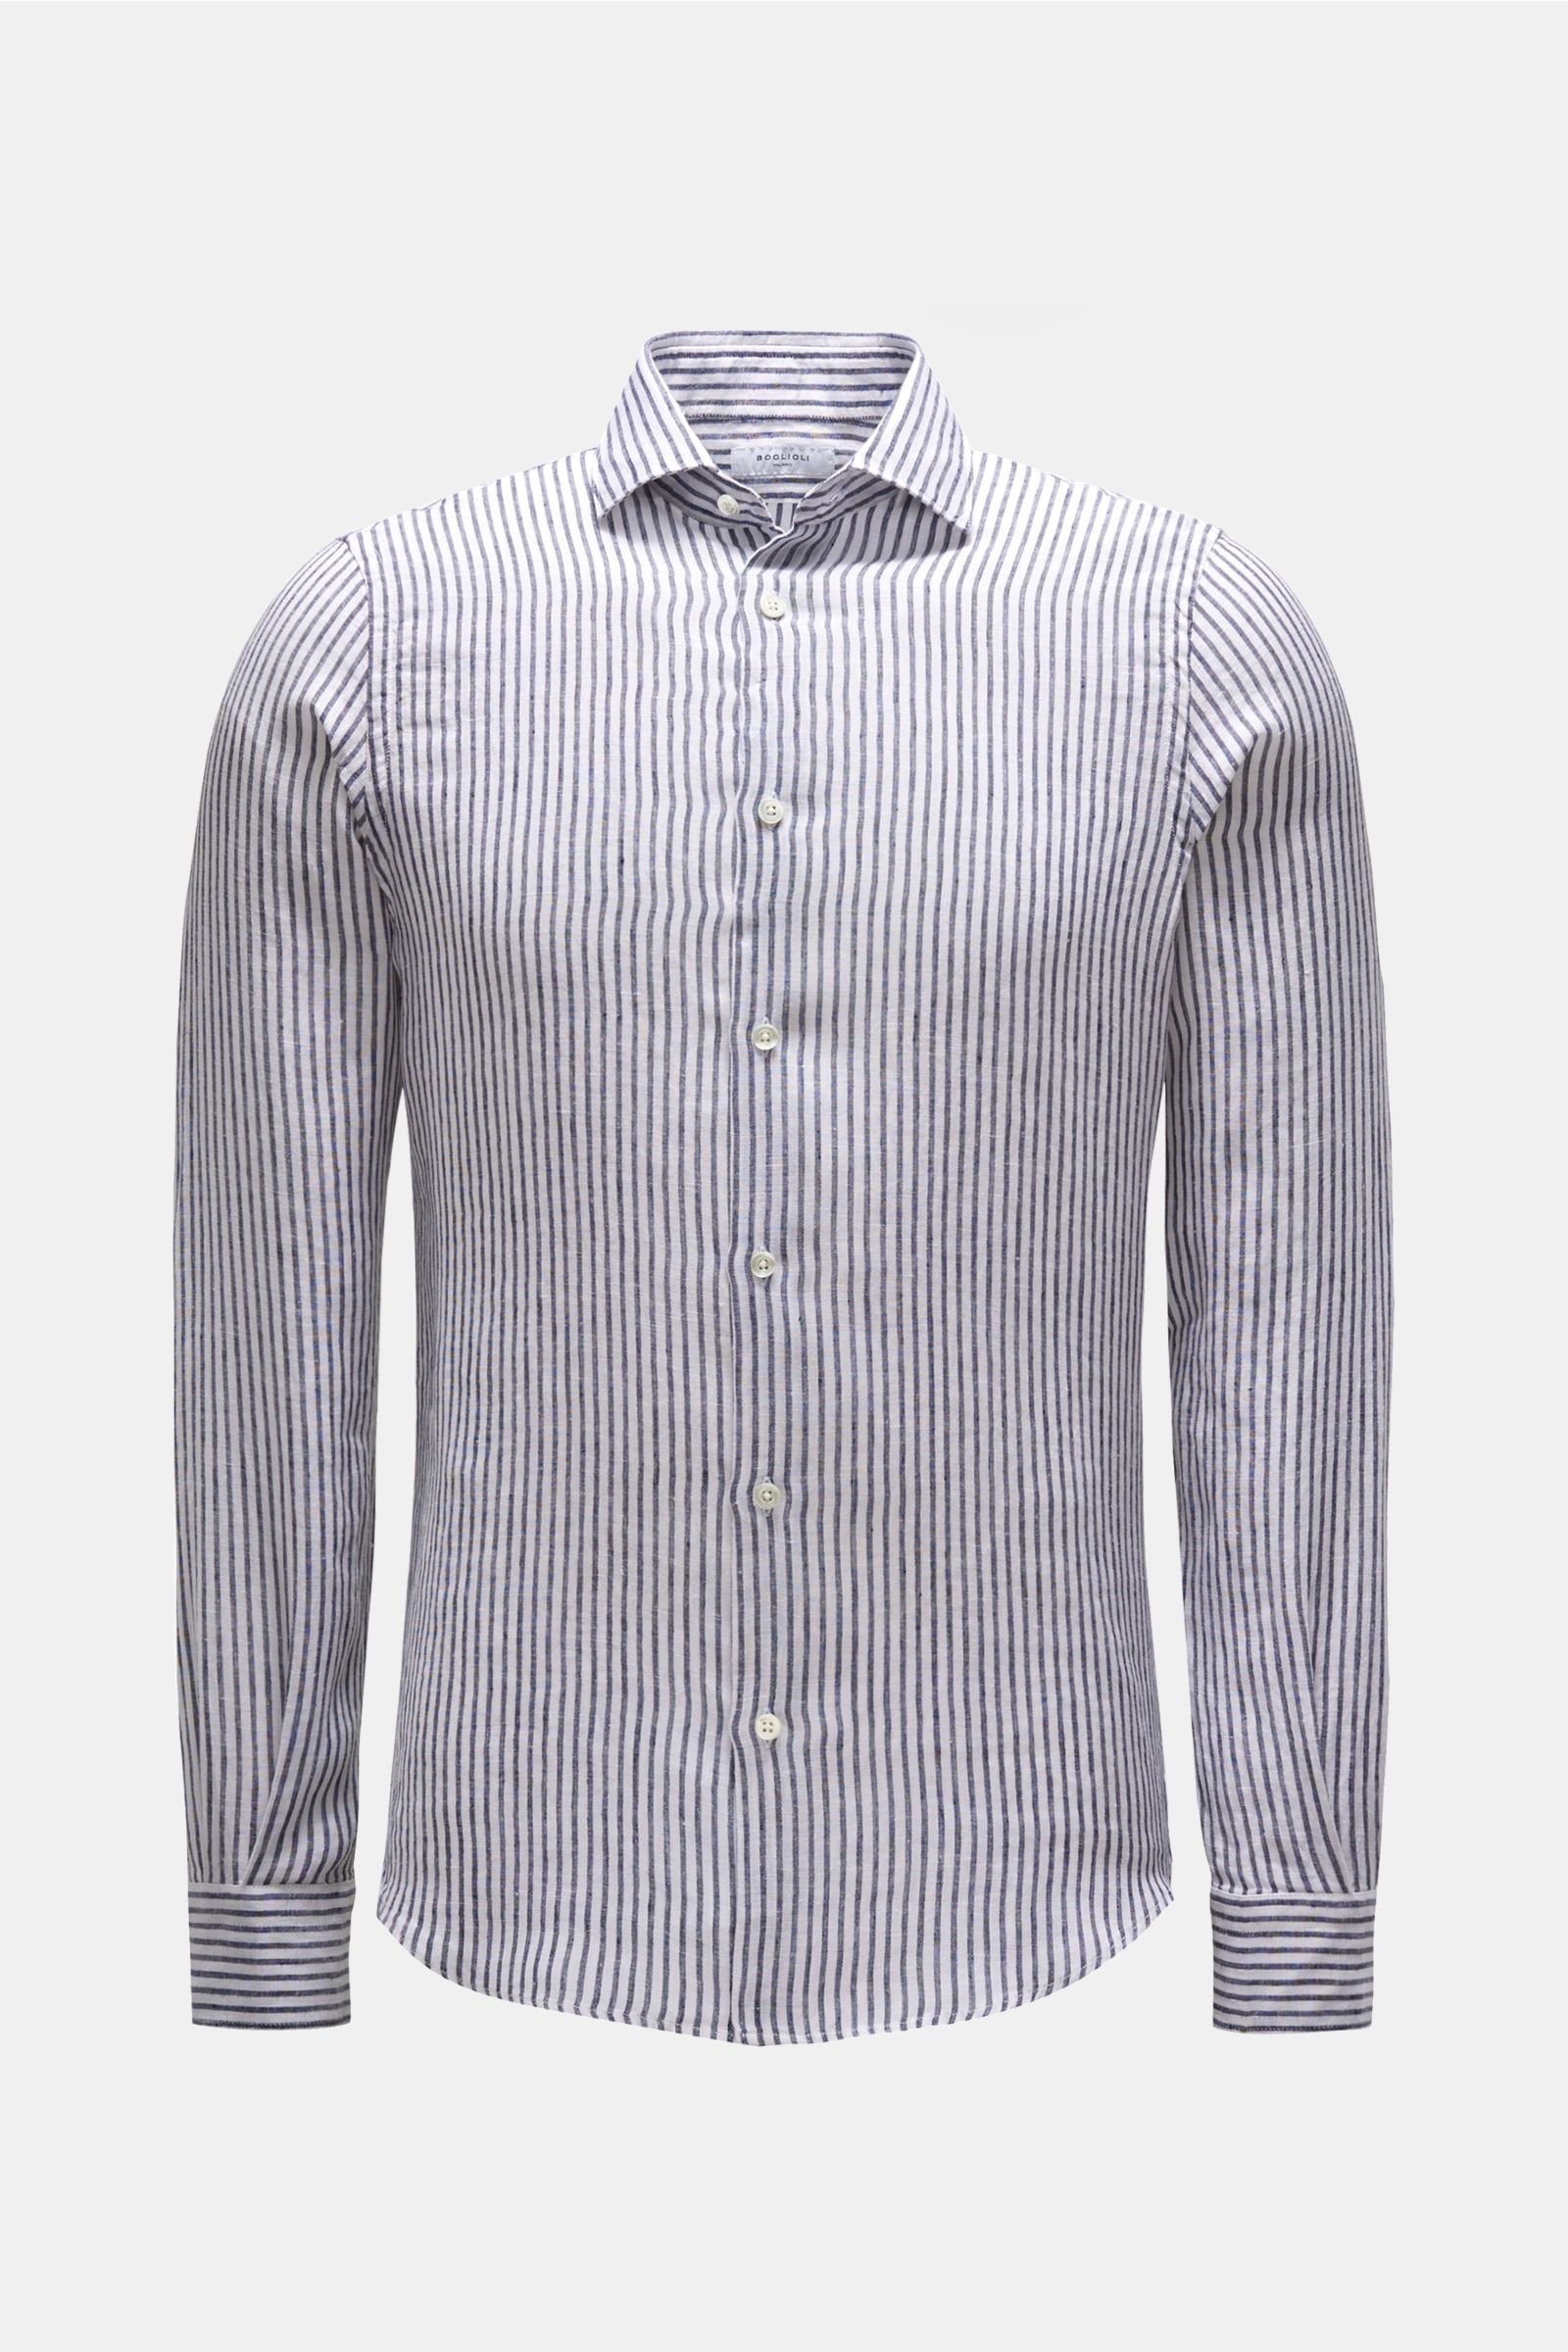 Linen shirt narrow collar navy/white striped